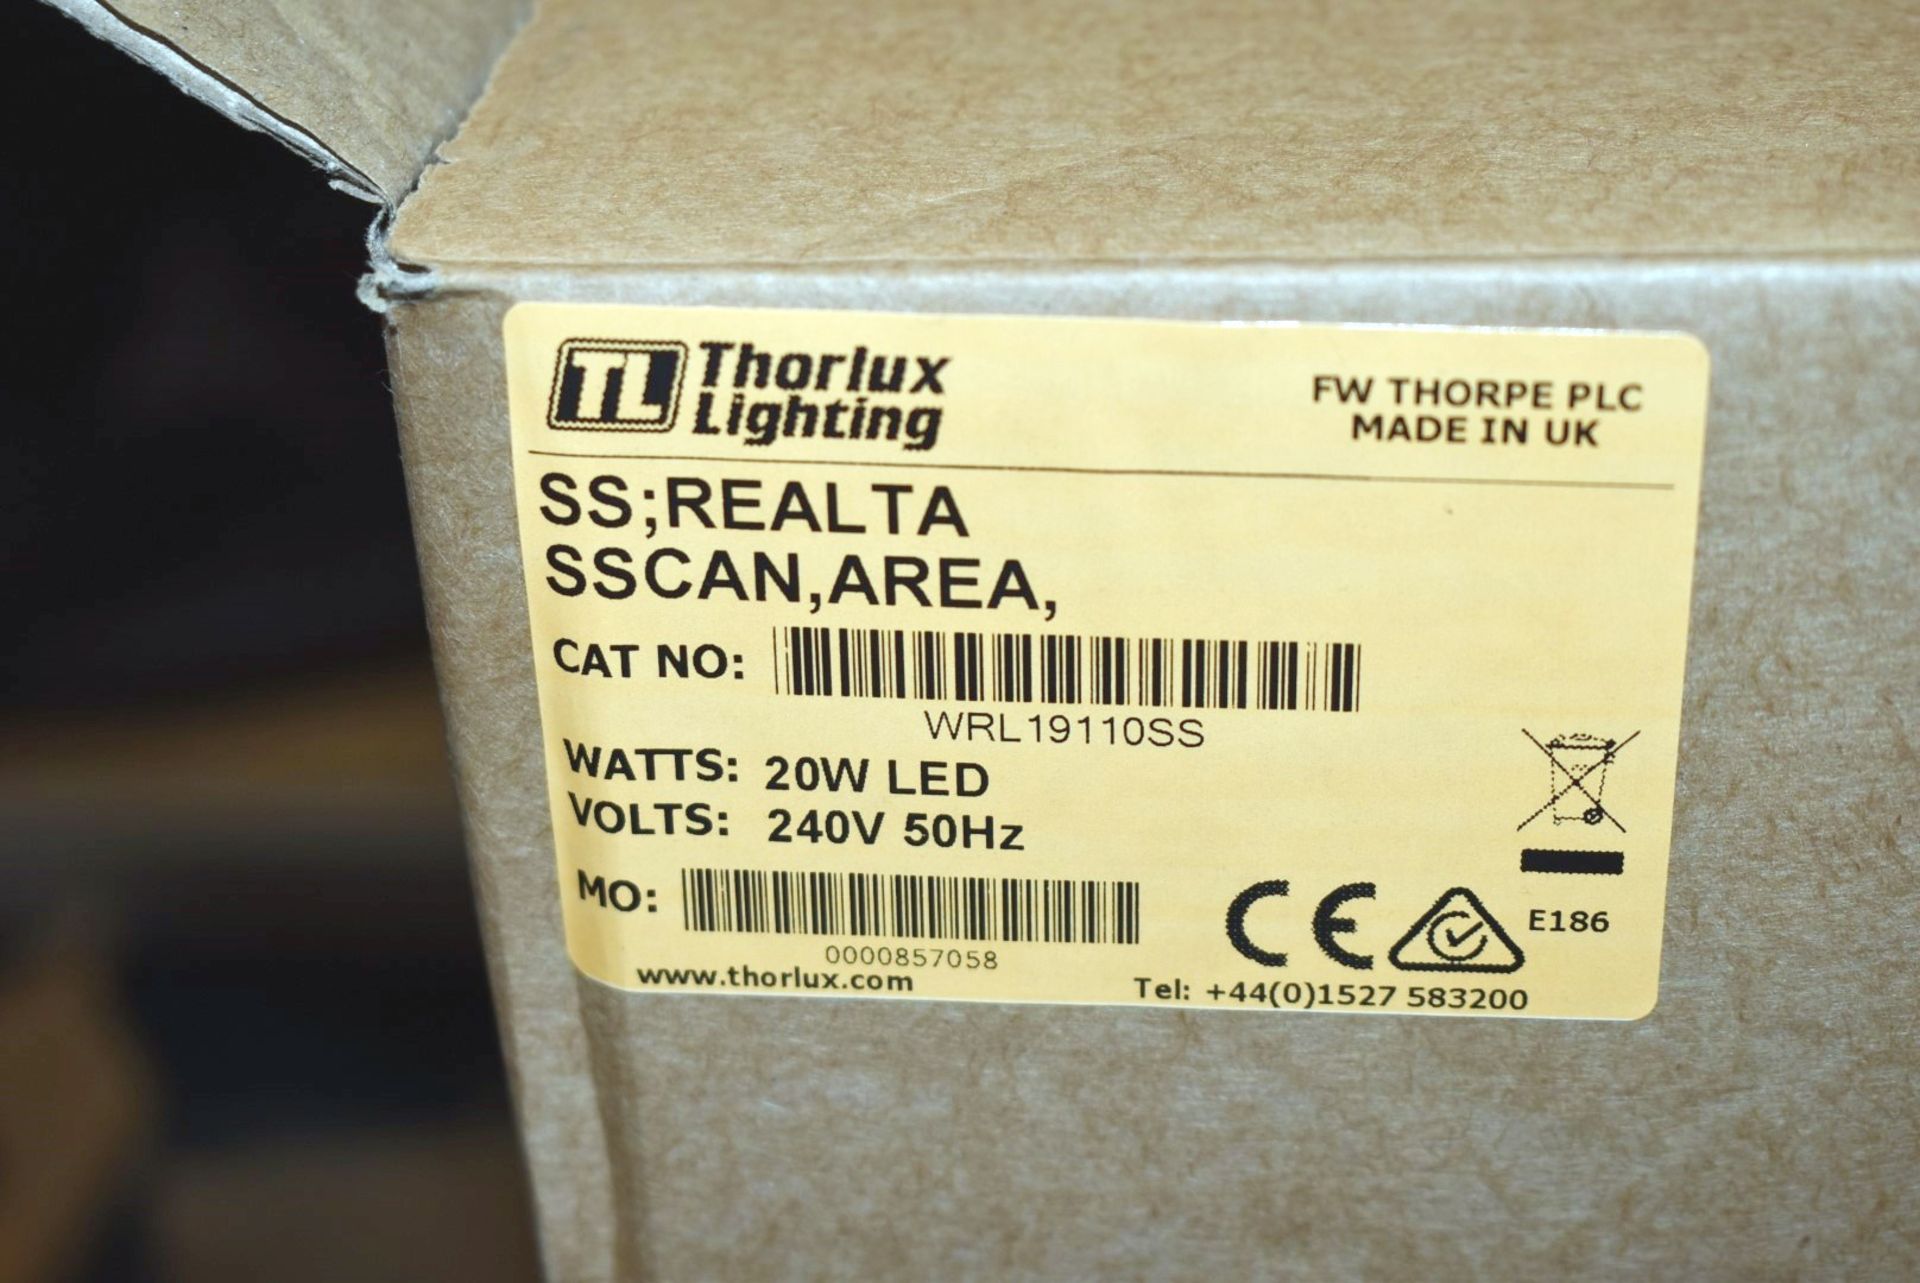 2 x Thorlux Realta Wall Mounted Luminaires Lights - Ref: TBC - CL816 - Location: Birmingham, B45 - Image 2 of 6